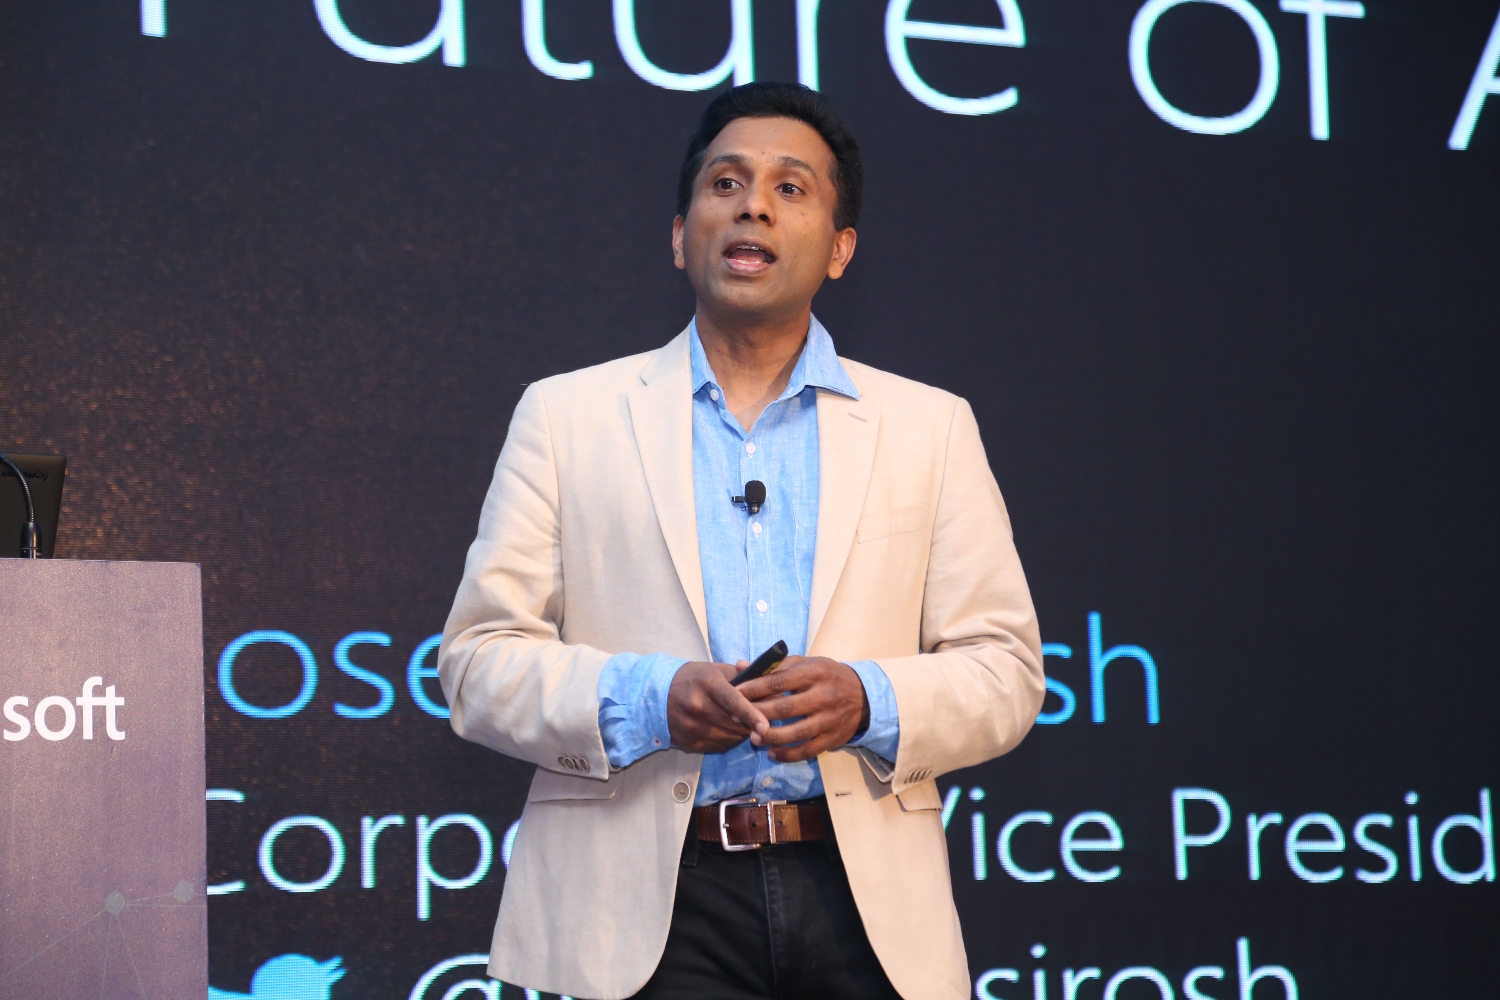 Joseph Sirosh - Corporate Vice President - Data Group, Microsoft speaking at the Microsoft Showcase for Machine Learning and Data Sciences in Bengaluru.